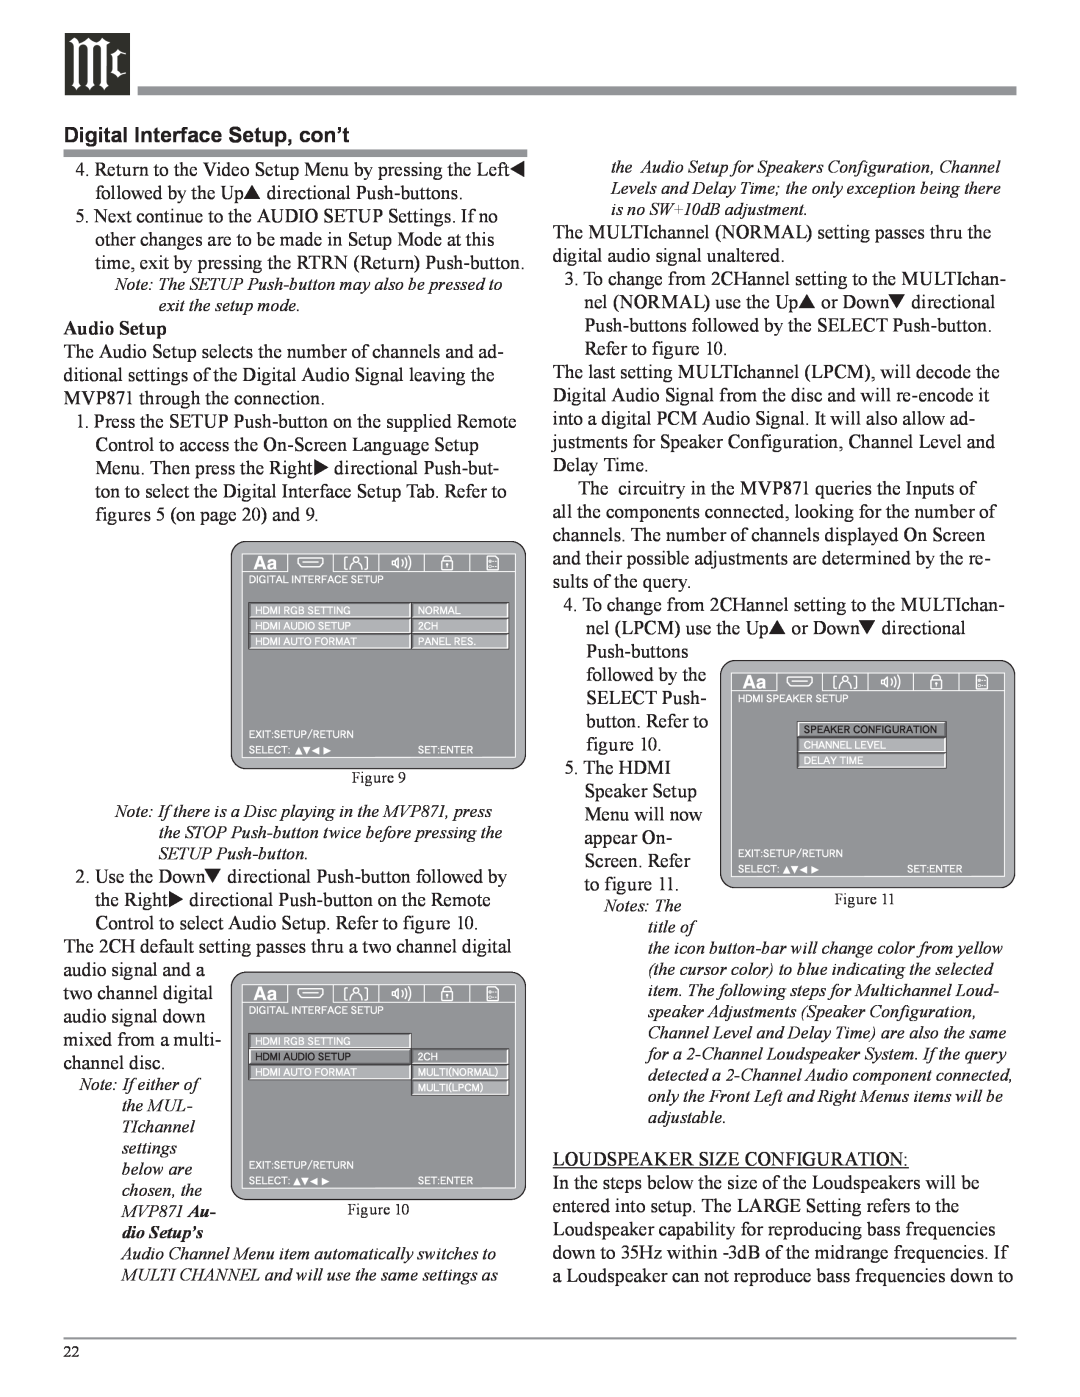 McIntosh MVP871 owner manual Digital Interface Setup, con’t, Audio Setup 